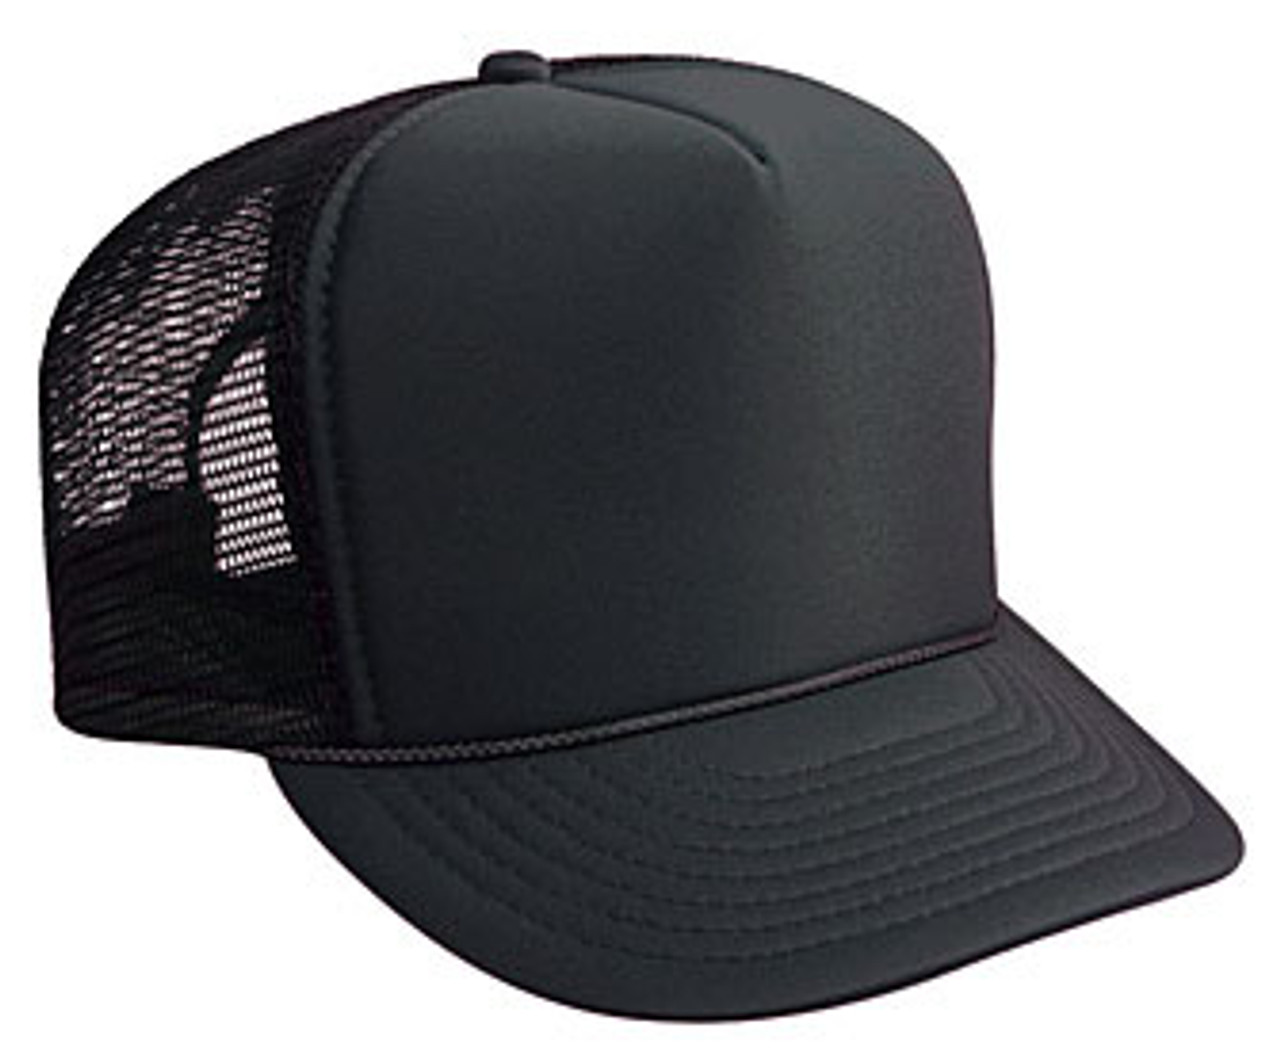 SOLID BLACK MESH Hat, Trucker Hat, Mesh Hat, Blank Plain Hats